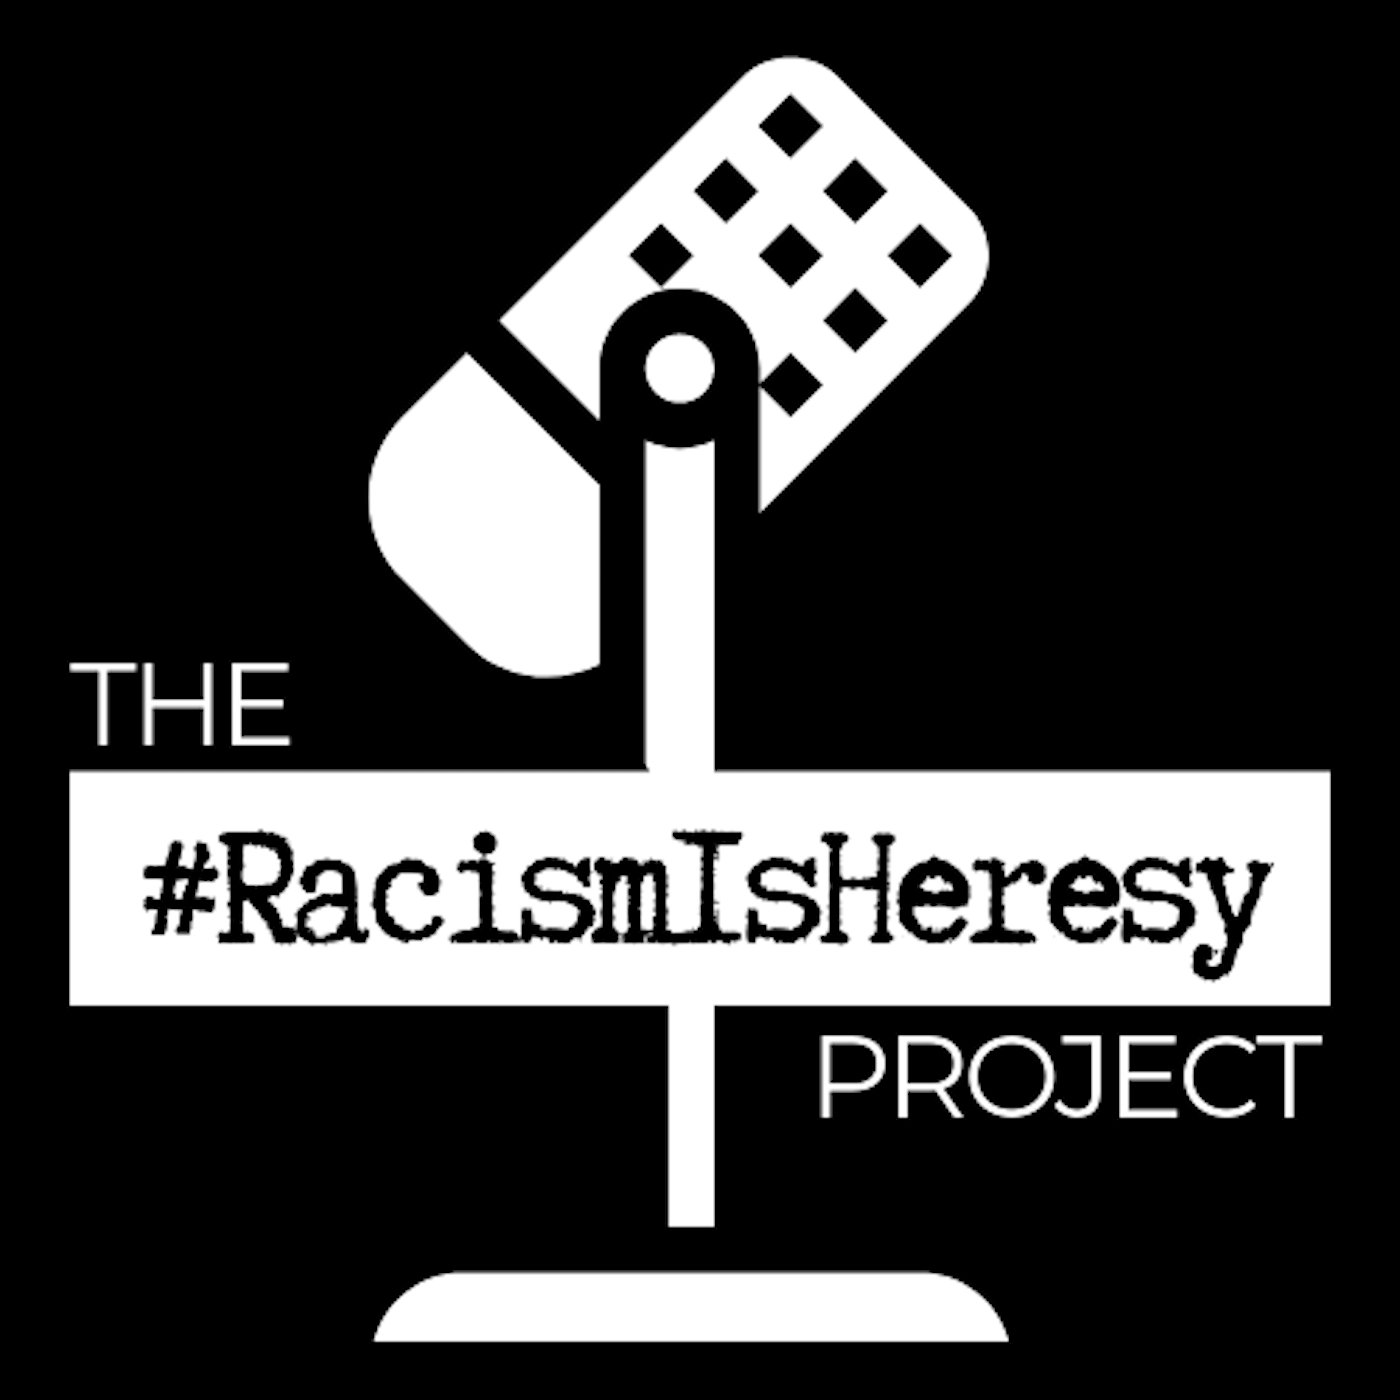 The #RacismIsHeresy Project's image